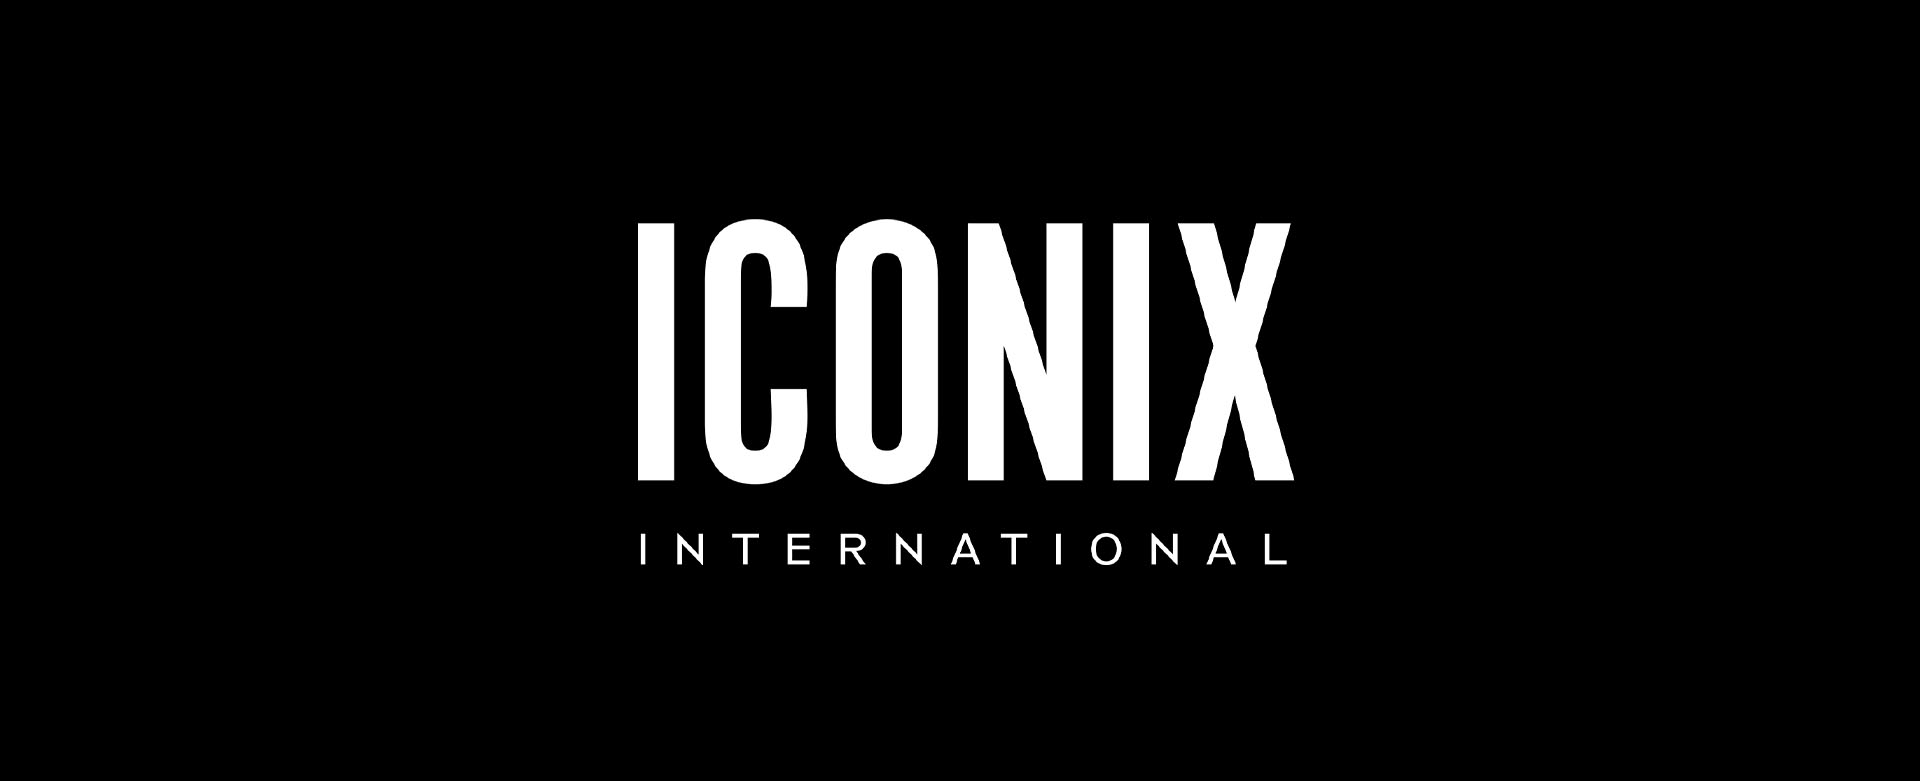 Cannon – Iconix International